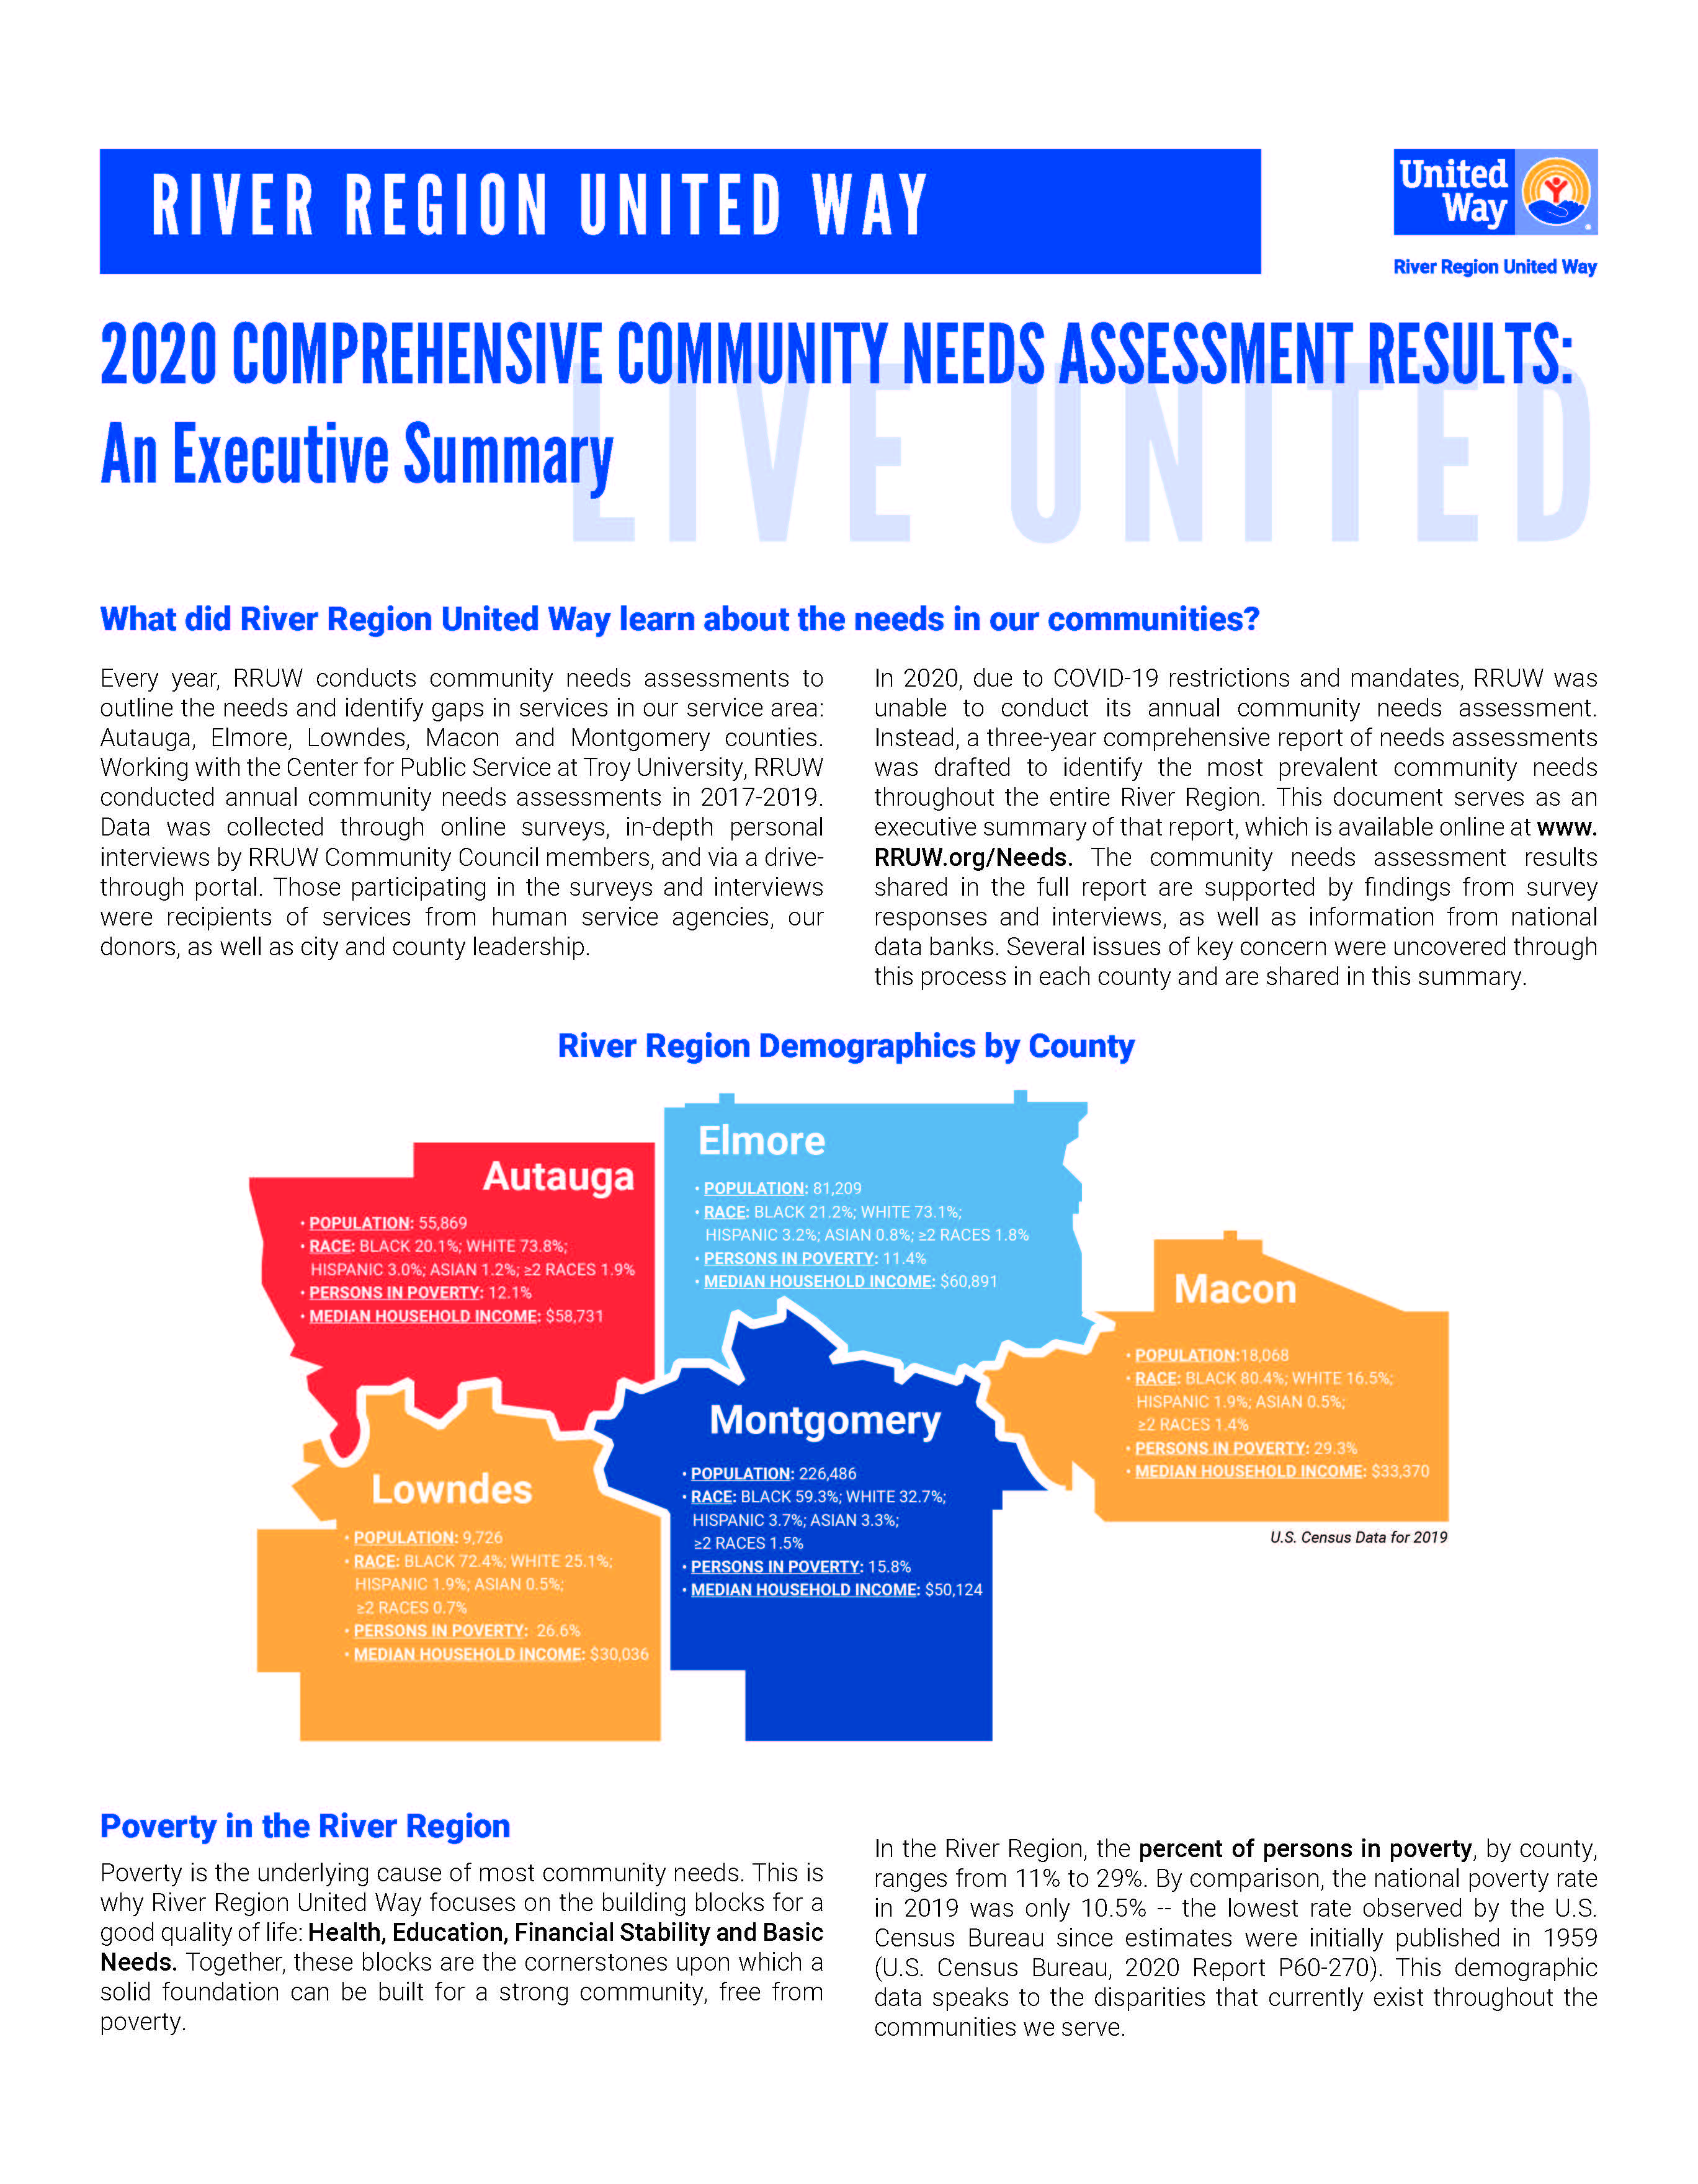 RRUW 2020 Comprehensive Community Needs Assessment